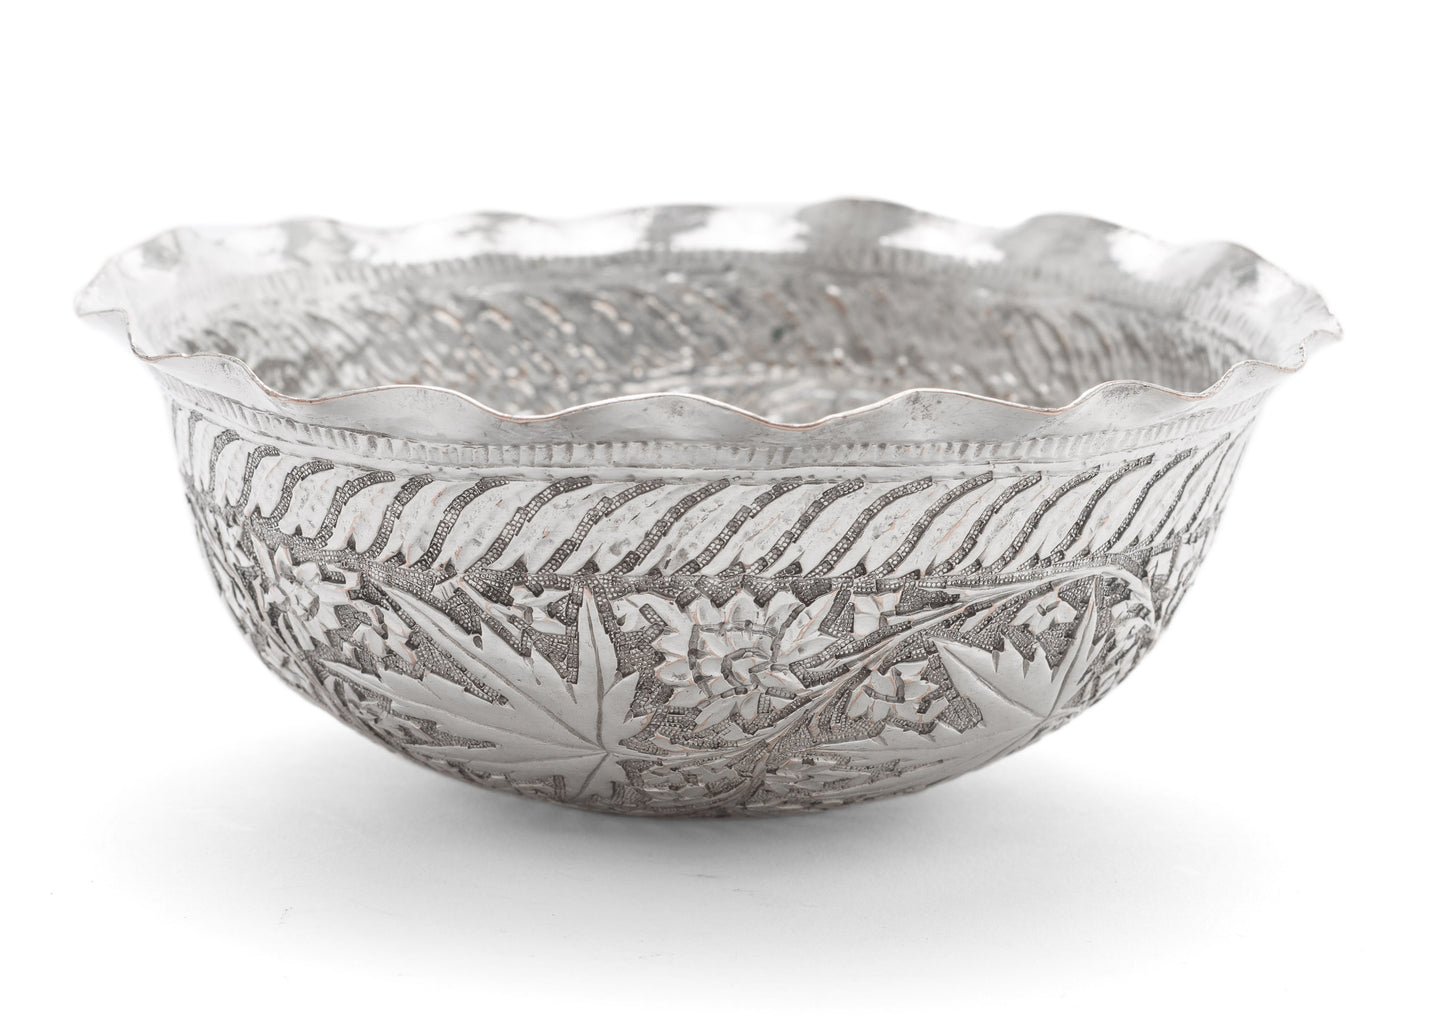 Antique Indian Kashmir Chinar Buen Leaf Silver Plated Repousse Bowl c1880 (Code 2114)